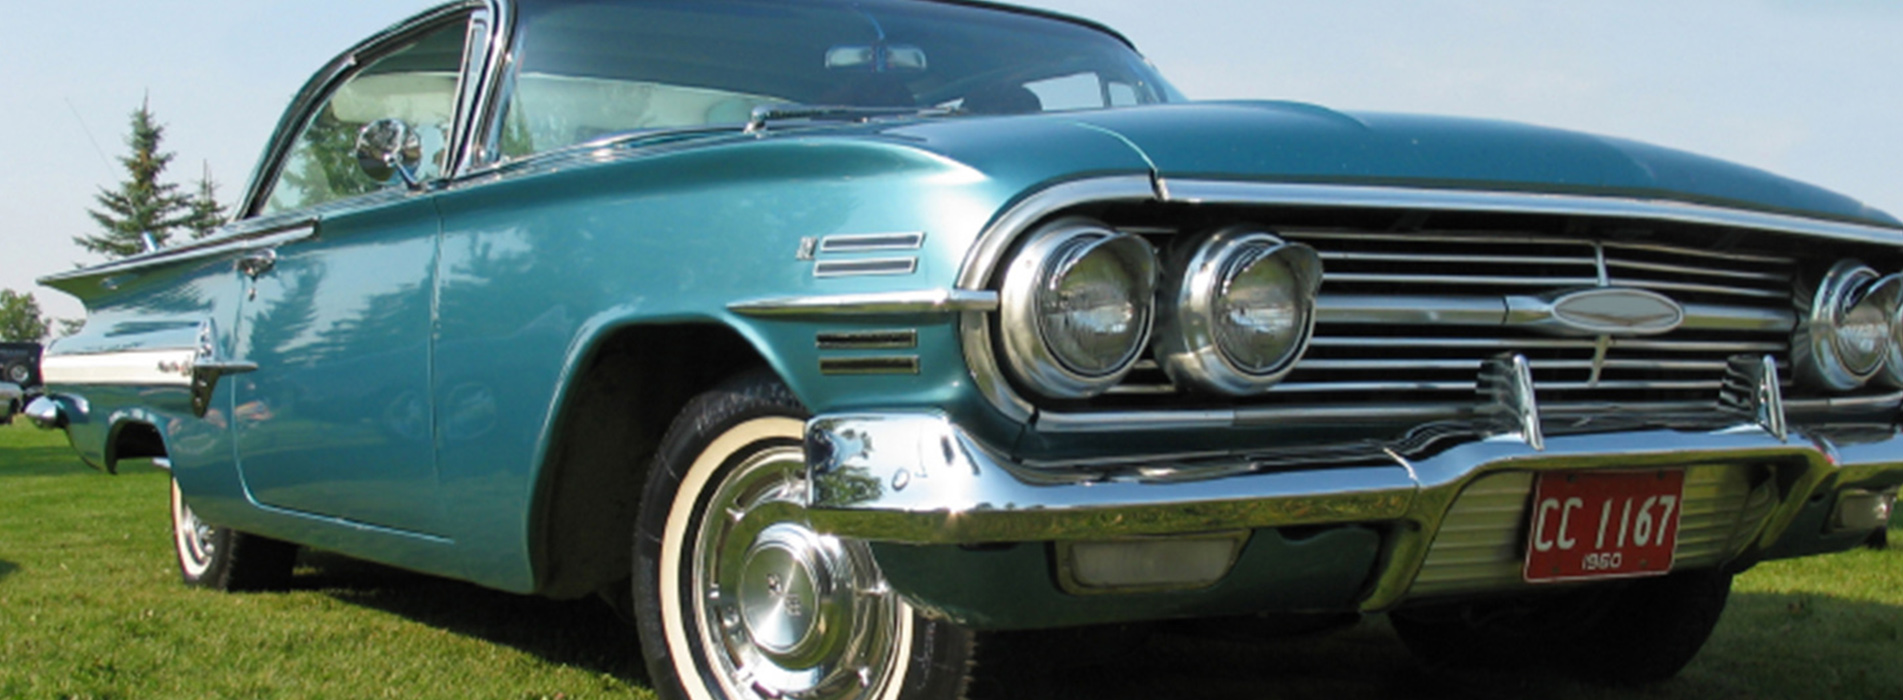 Kansas Classic Car insurance coverage